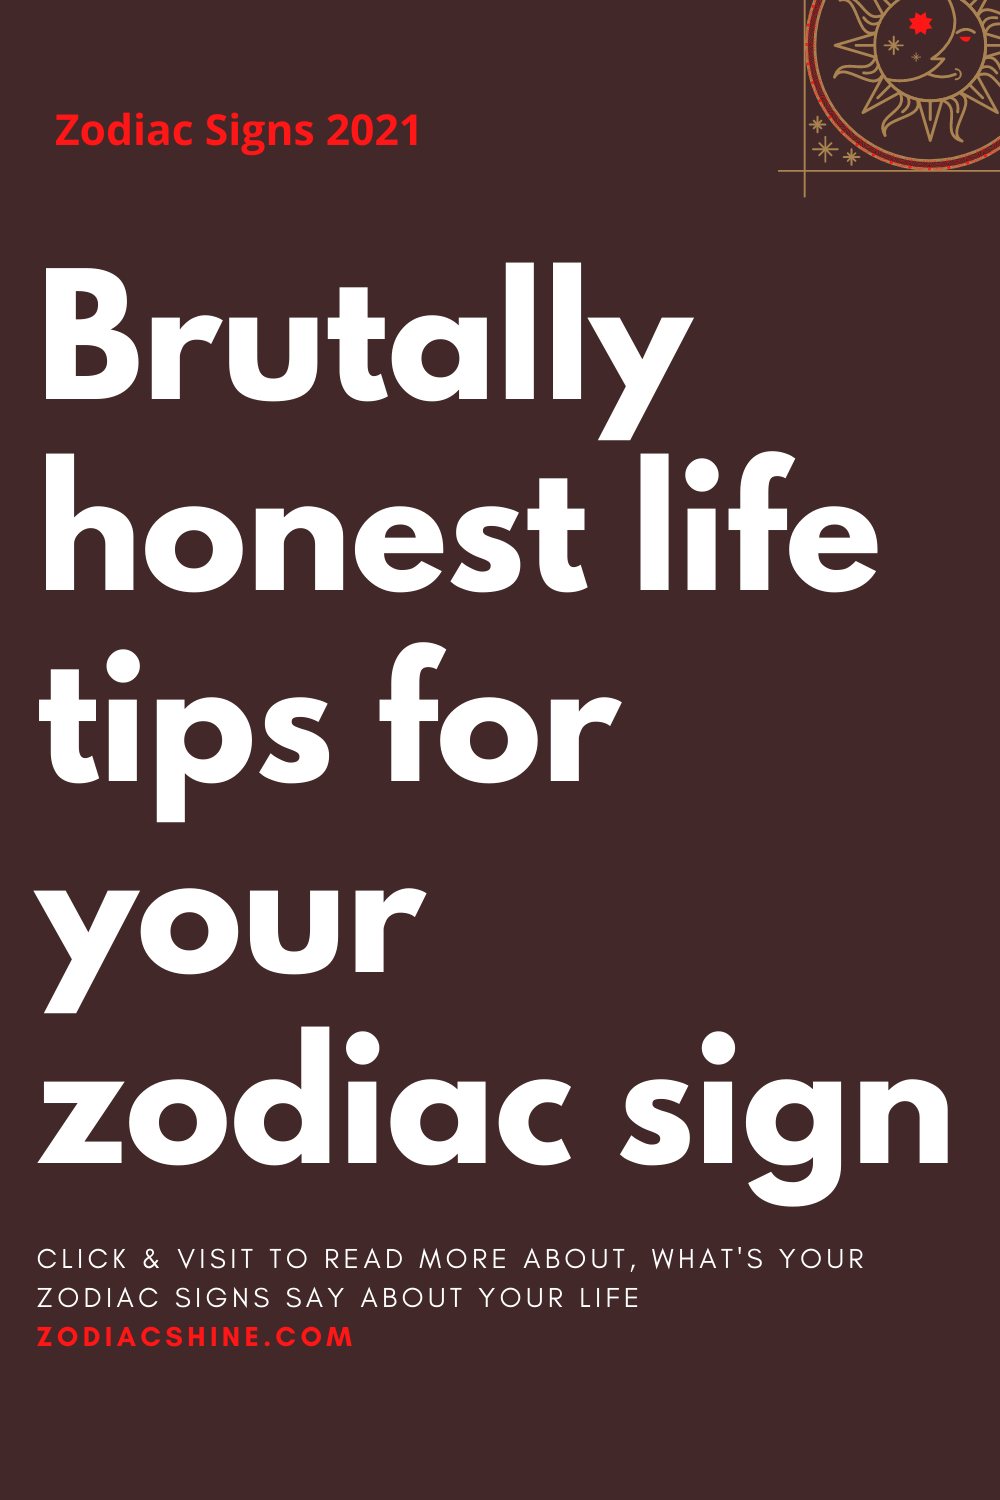 Brutally honest life tips for your zodiac sign